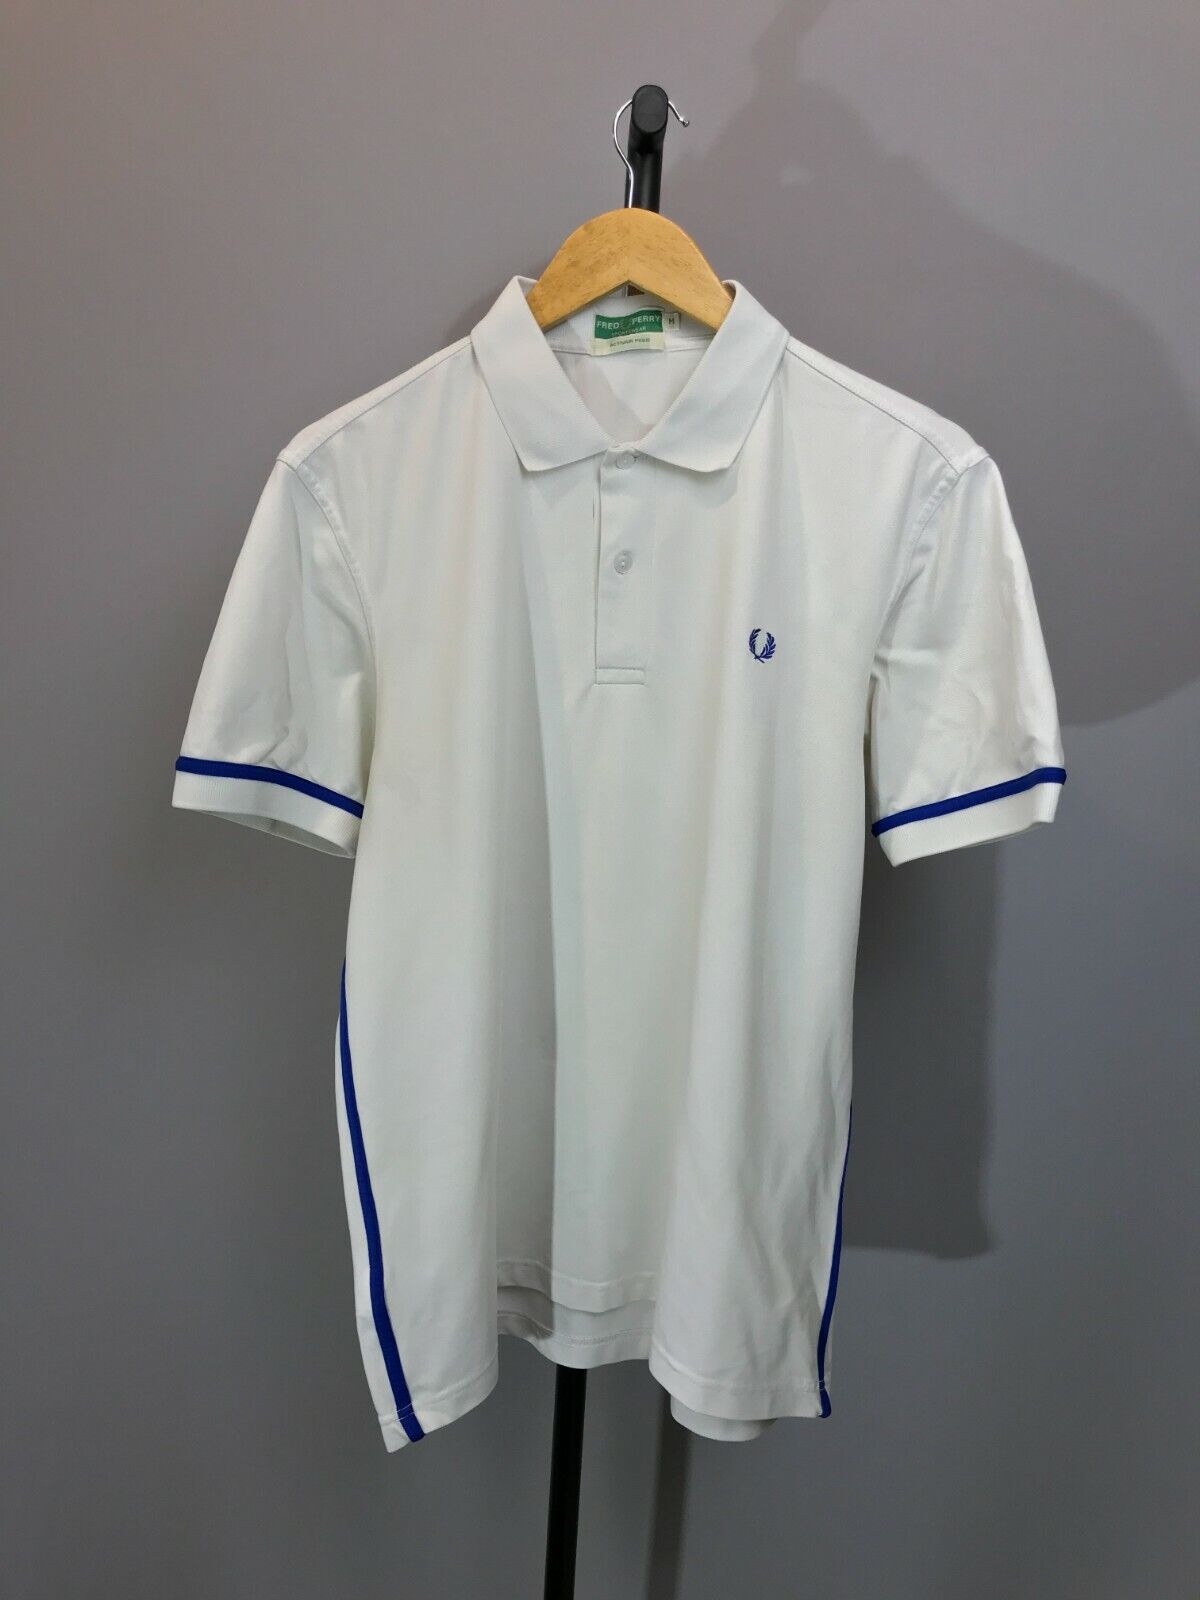 Shirt Fred Perry Sportswear activair pique Men`s Taped Tennis Polo medium |  eBay